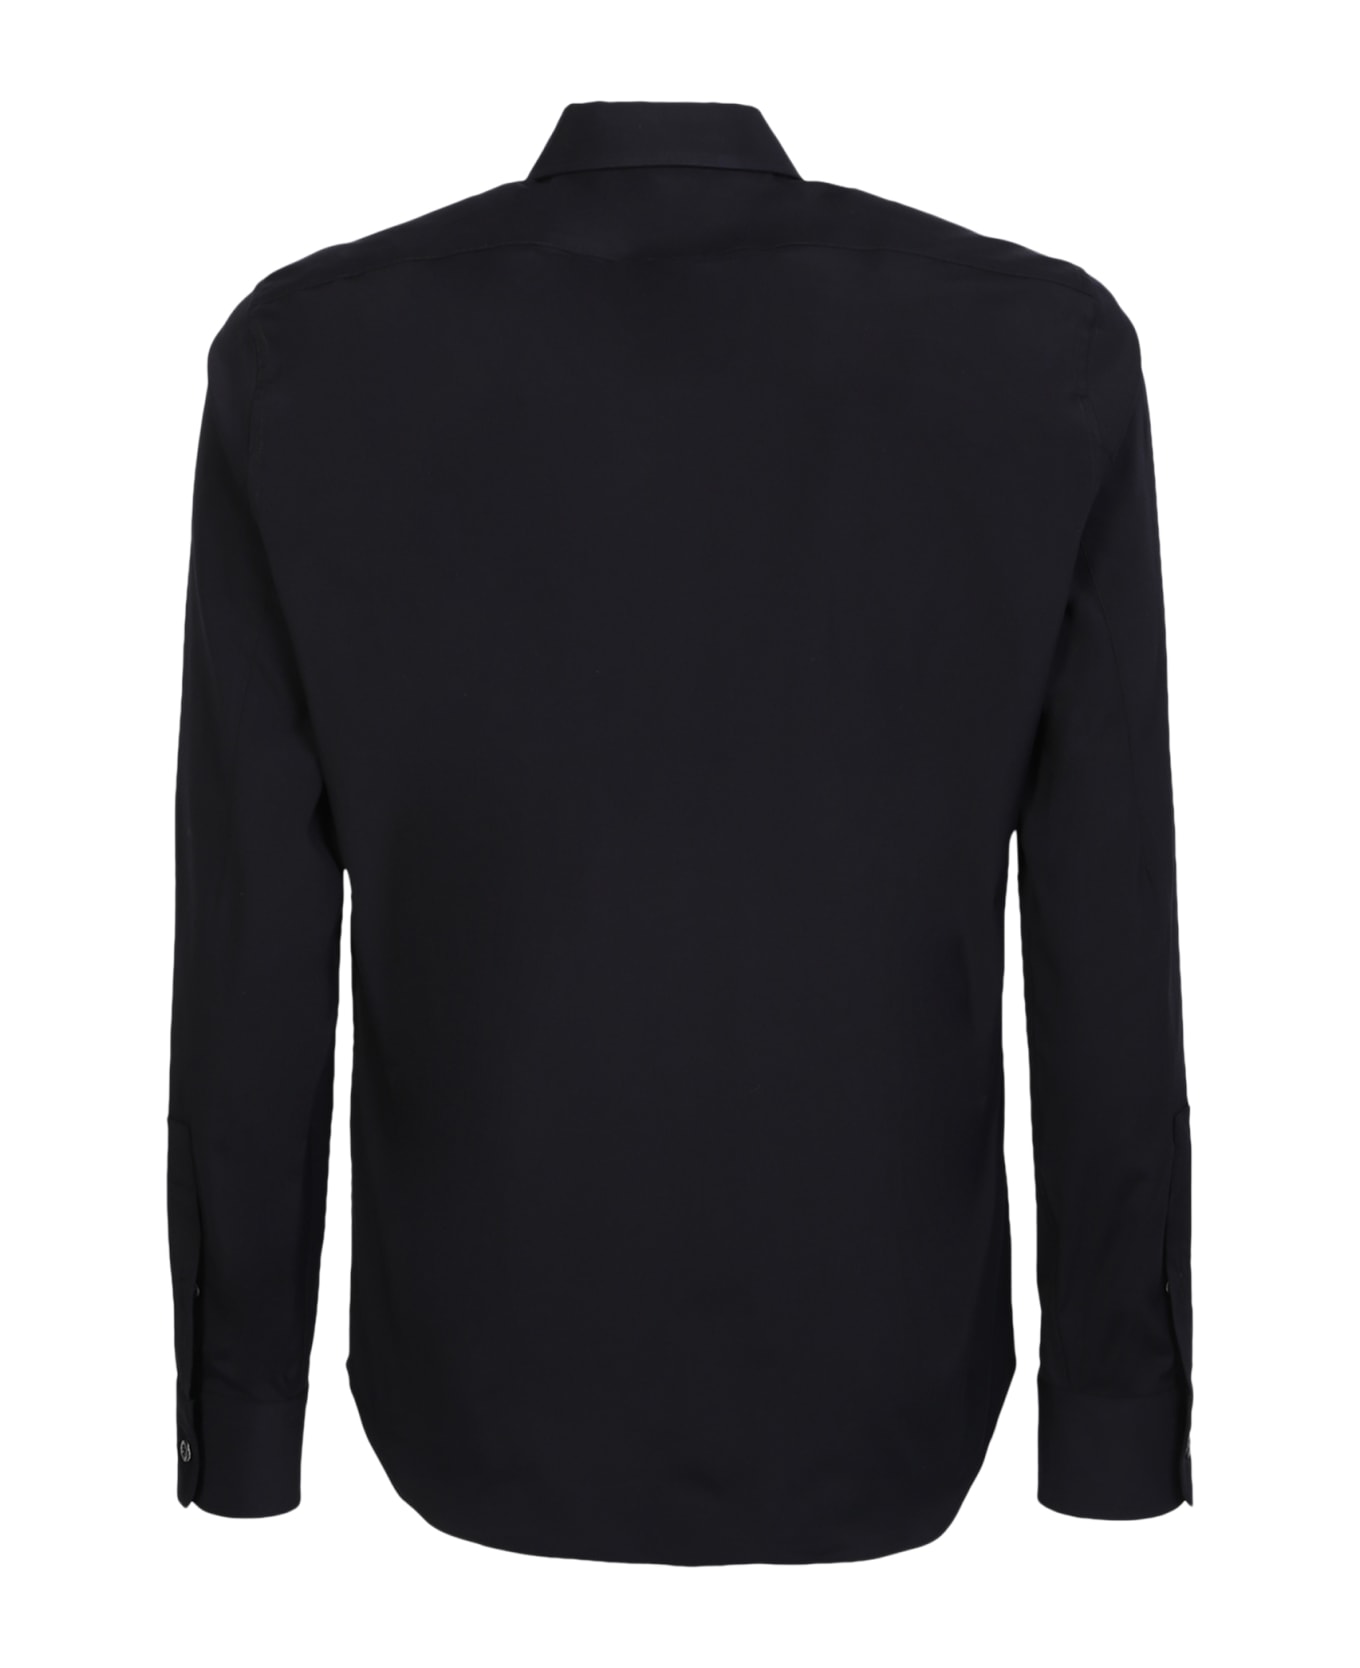 Alexander McQueen Embellished Collar Shirt - Black シャツ